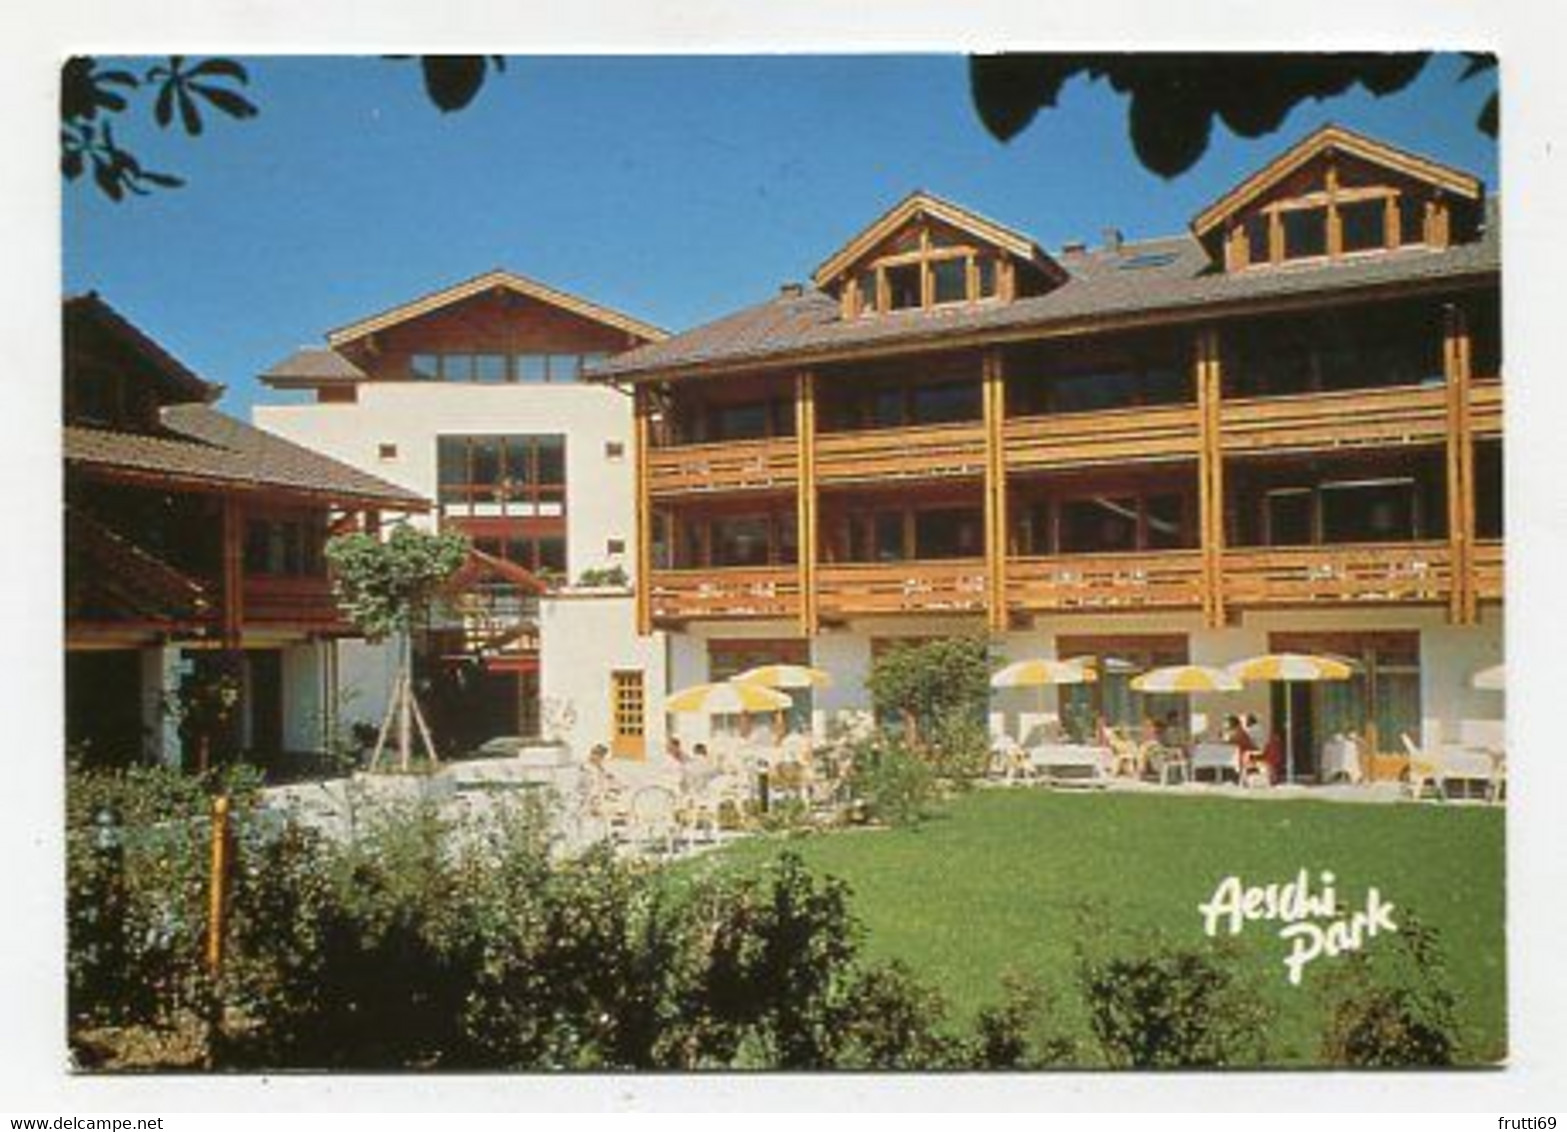 AK 020061 SWITZERLAND - Aeschi - Hotel Aeschi-Park - Aeschi